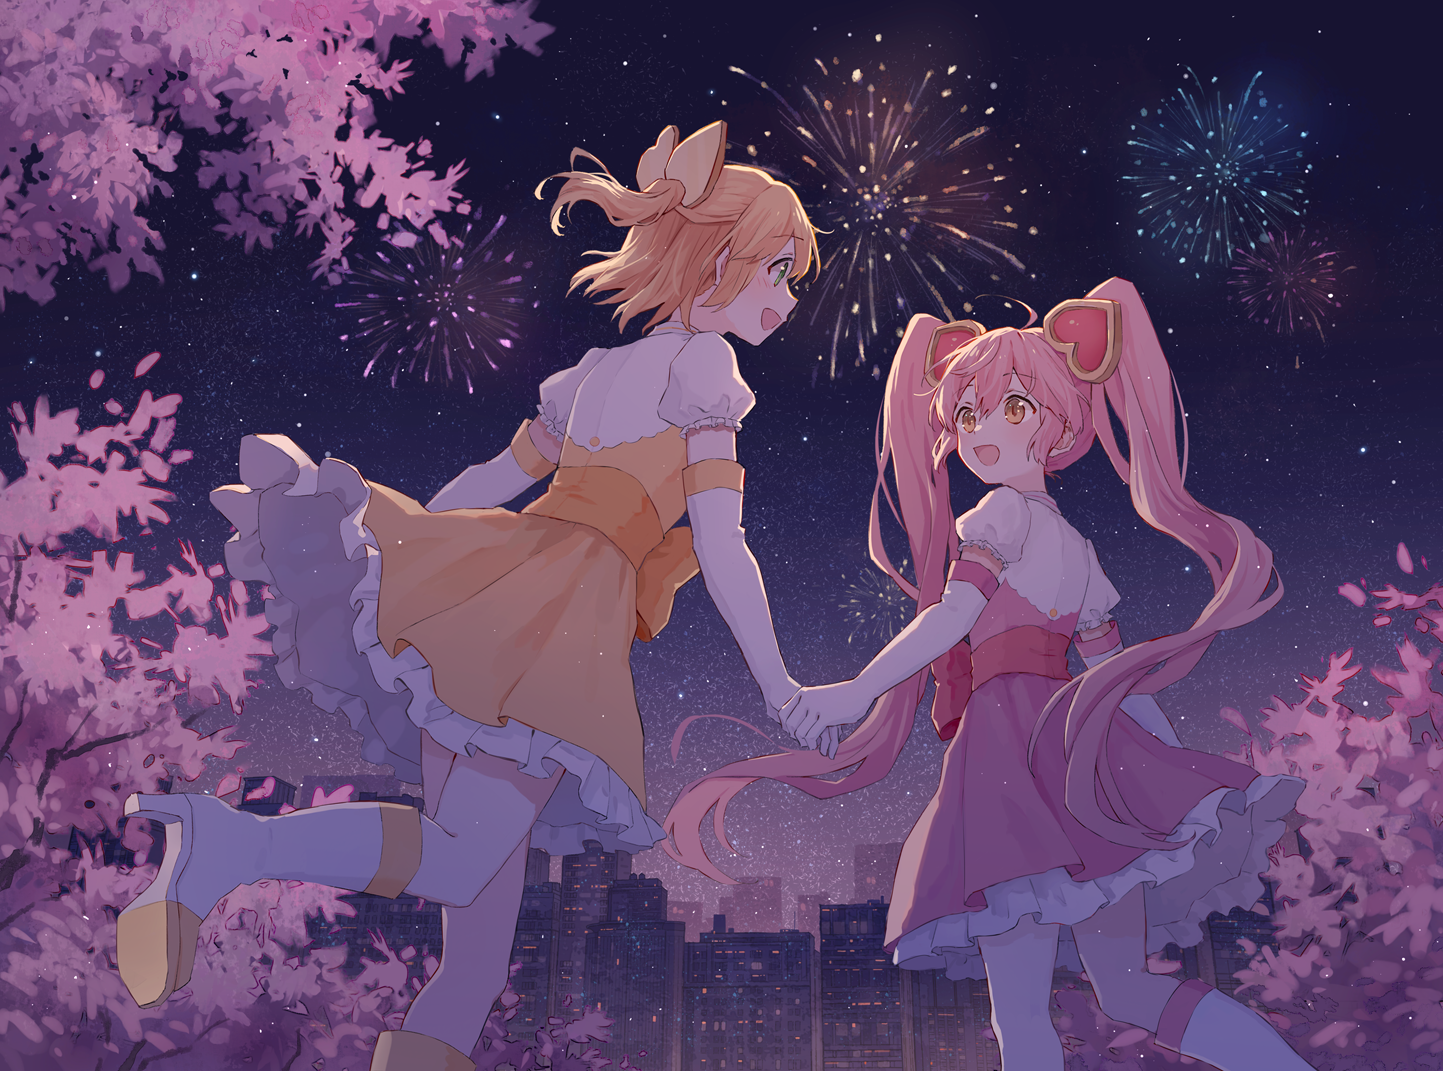 Anime 1443x1071 anime anime girls digital art artwork 2D portrait display dress blonde pink hair twintails night fireworks